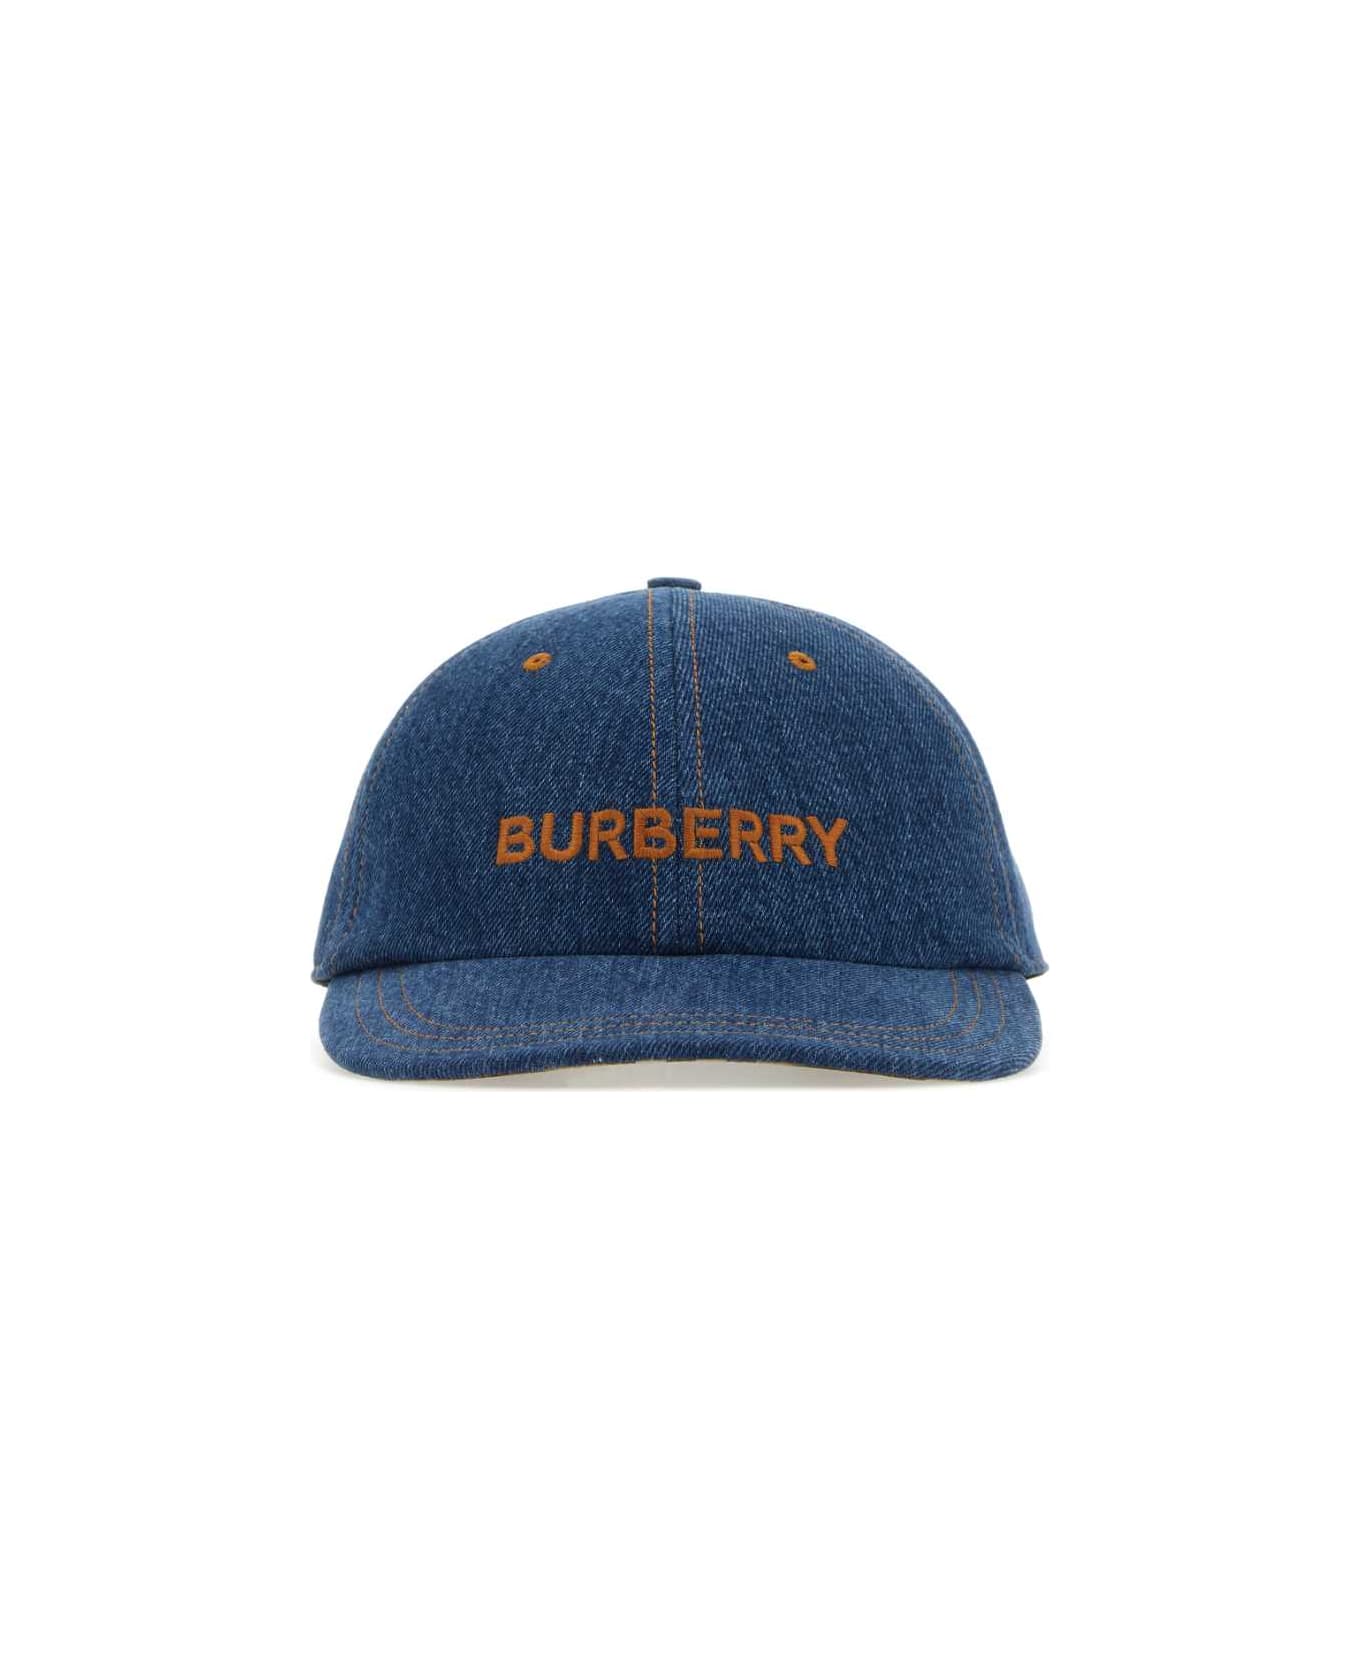 Burberry Denim Baseball Cap - WASHEDINDIGO